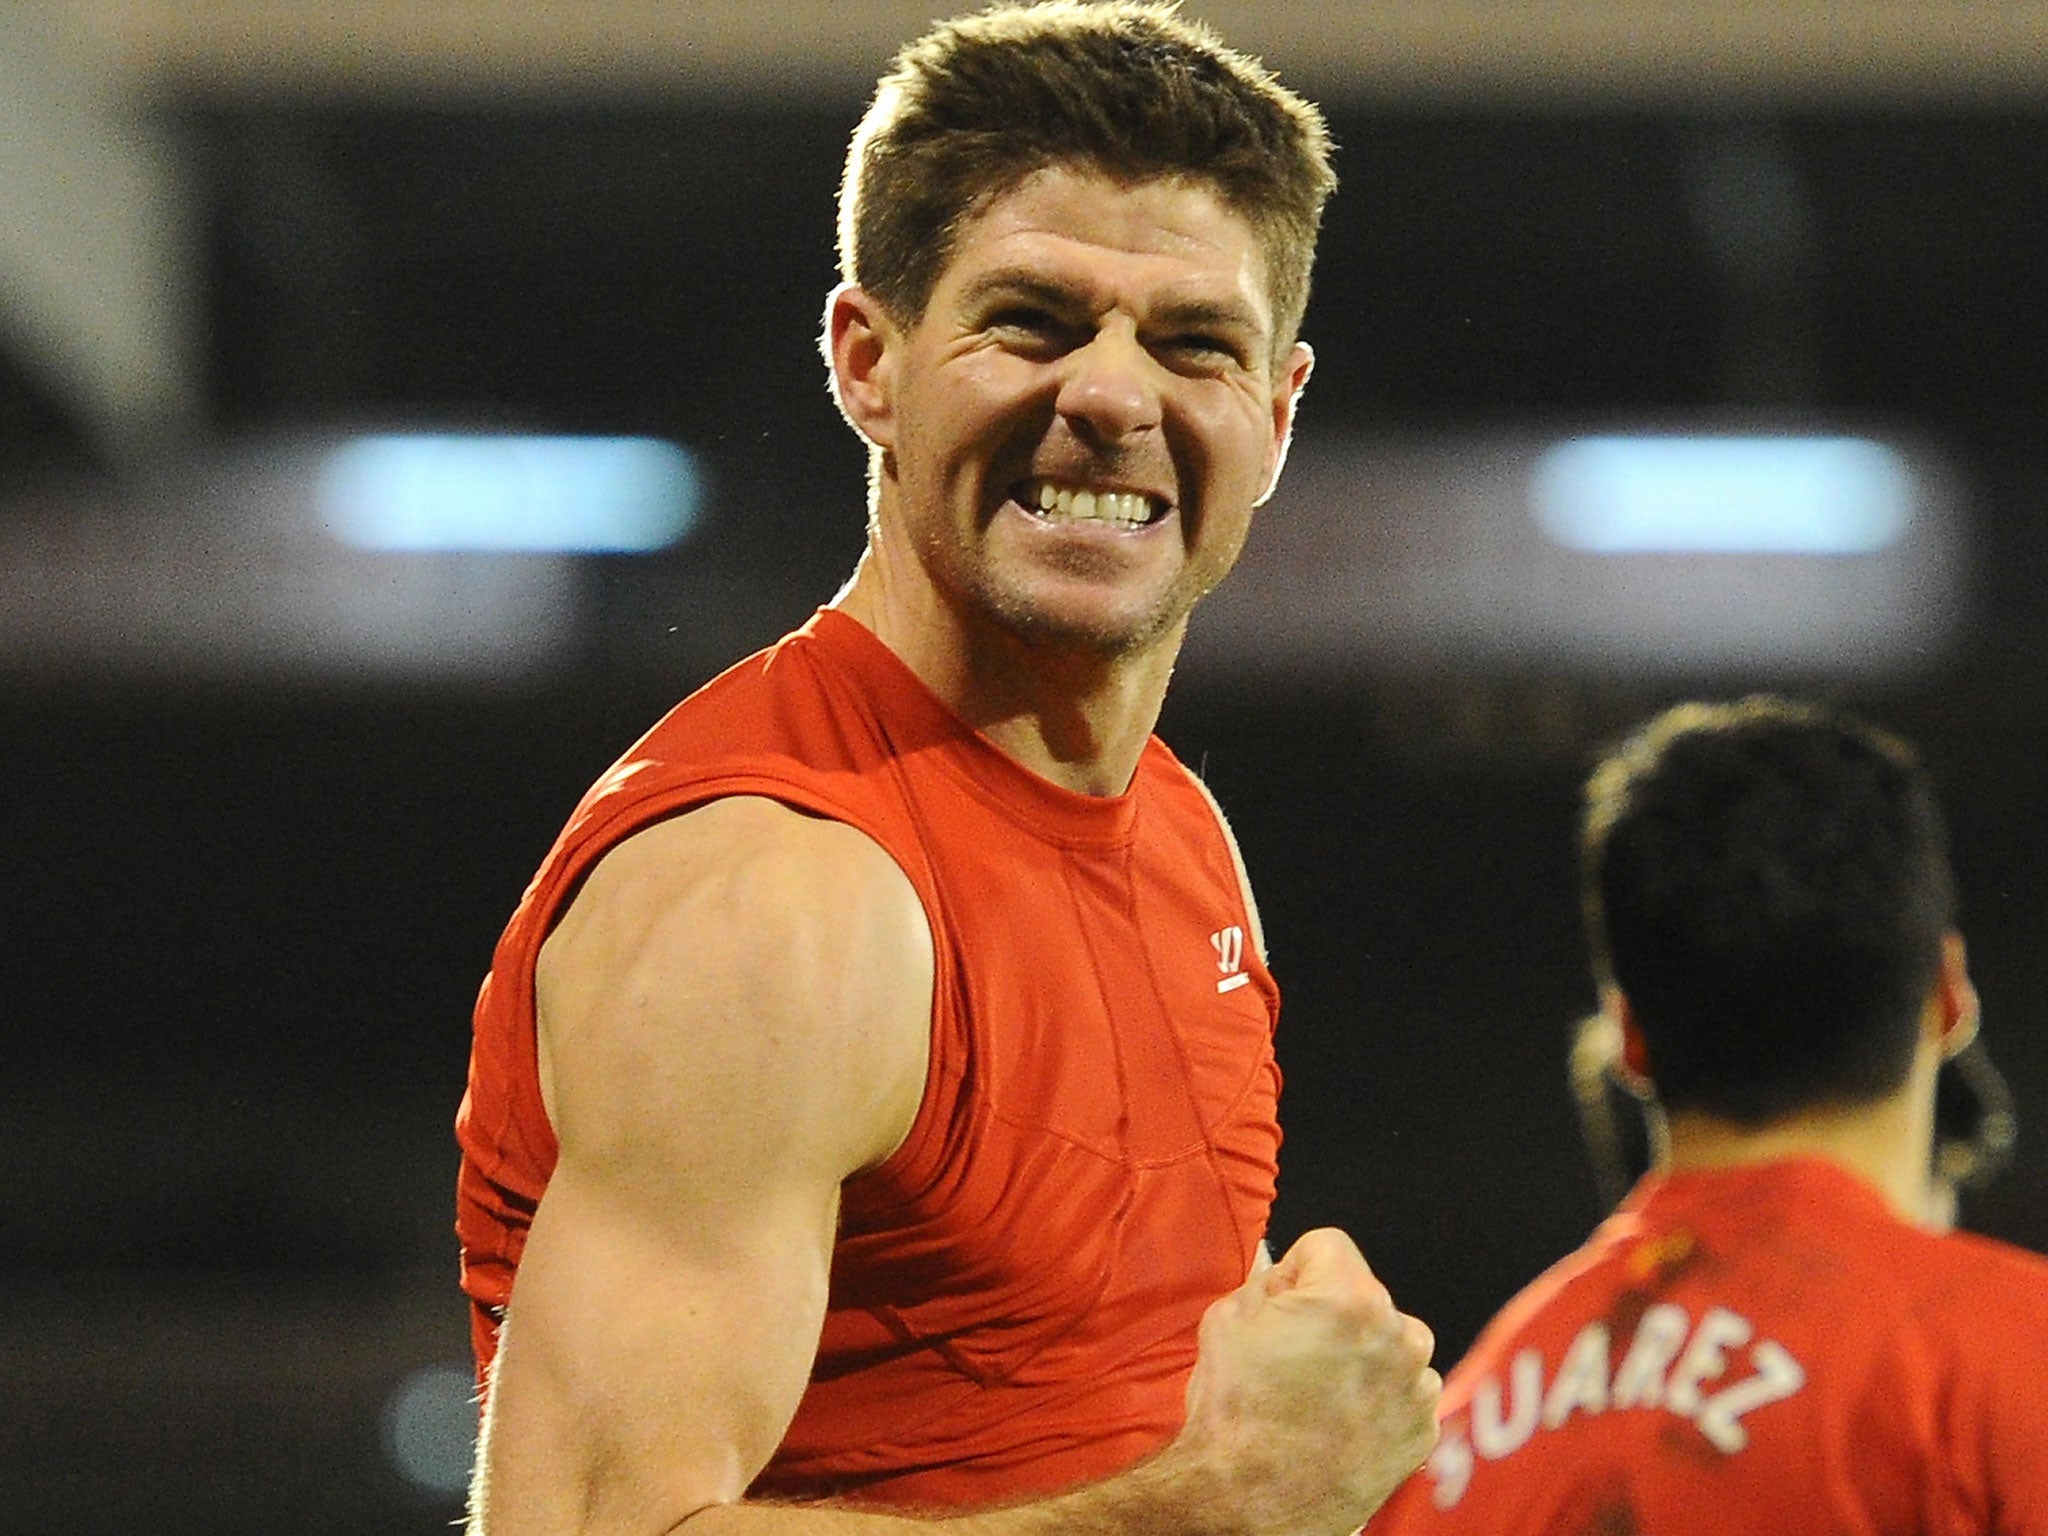 Steven Gerrard is leaving Liverpool